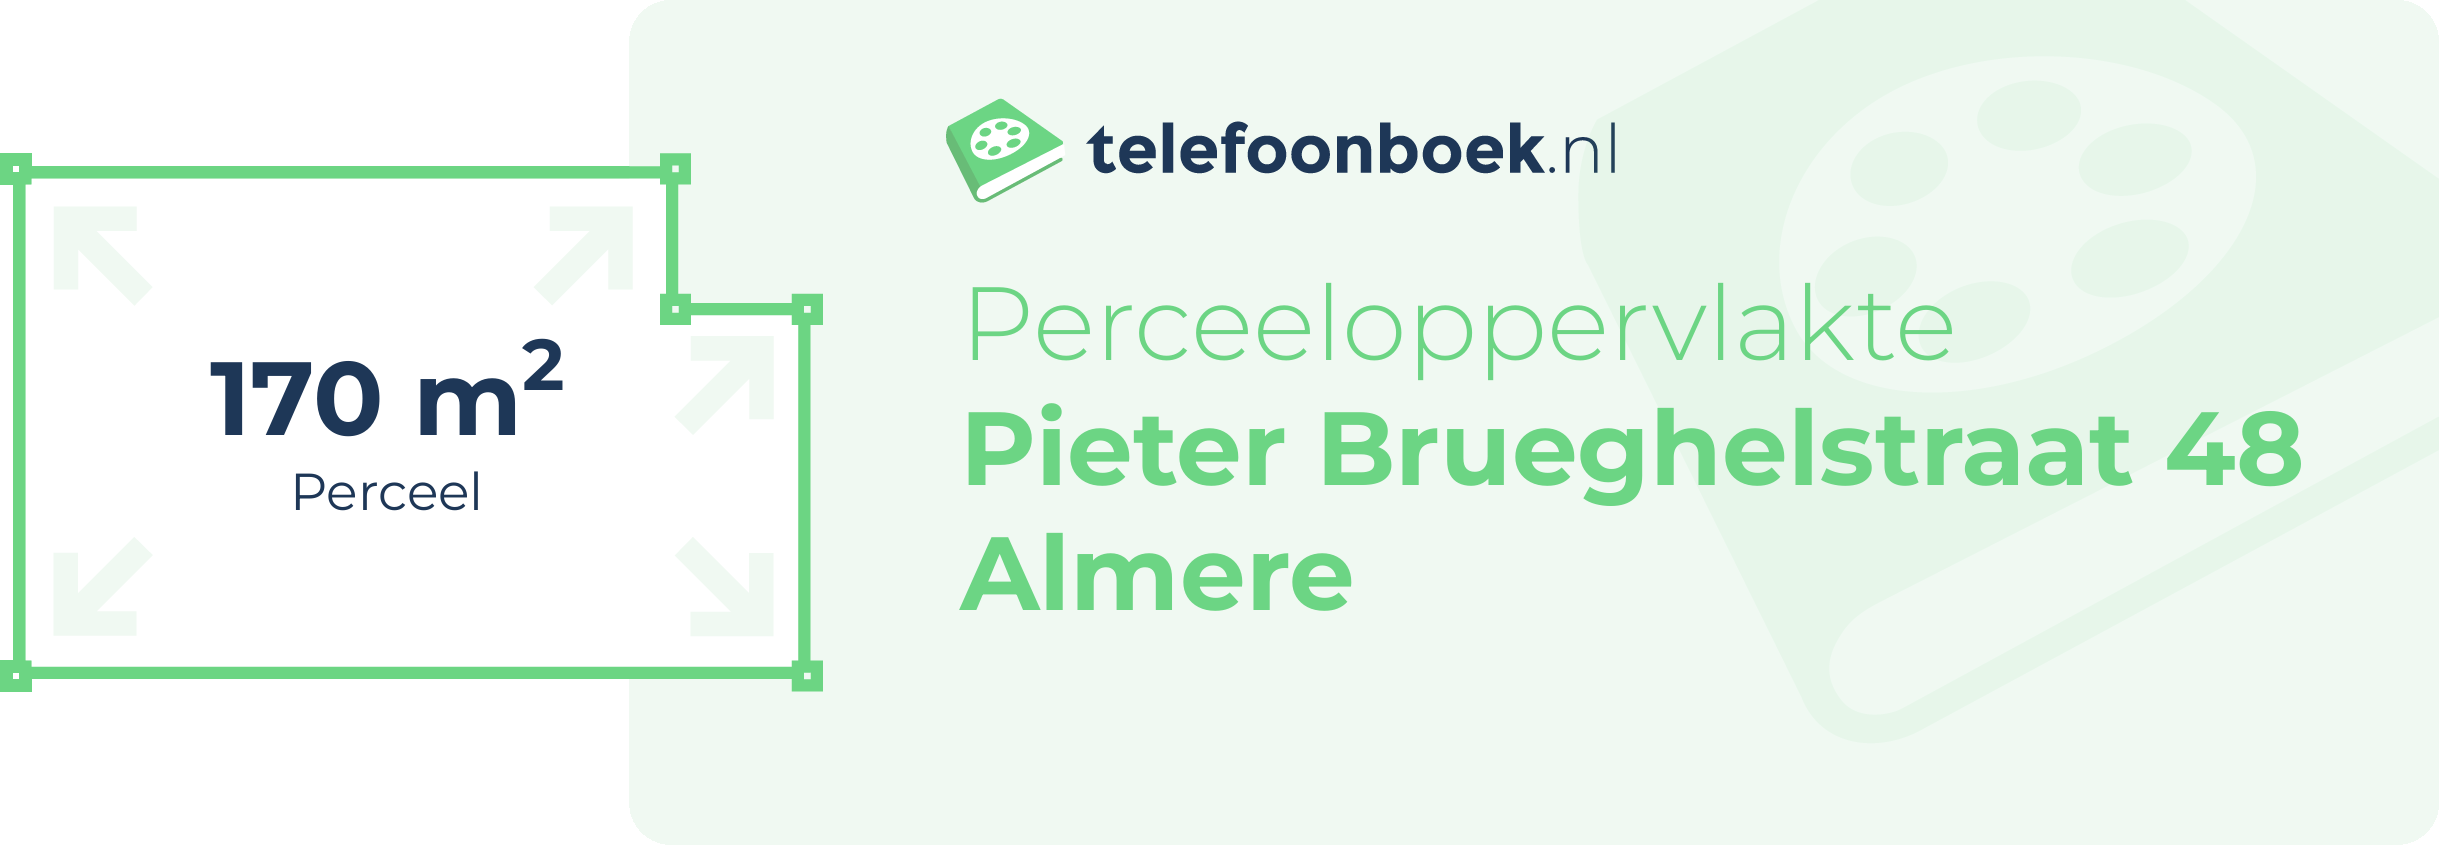 Perceeloppervlakte Pieter Brueghelstraat 48 Almere